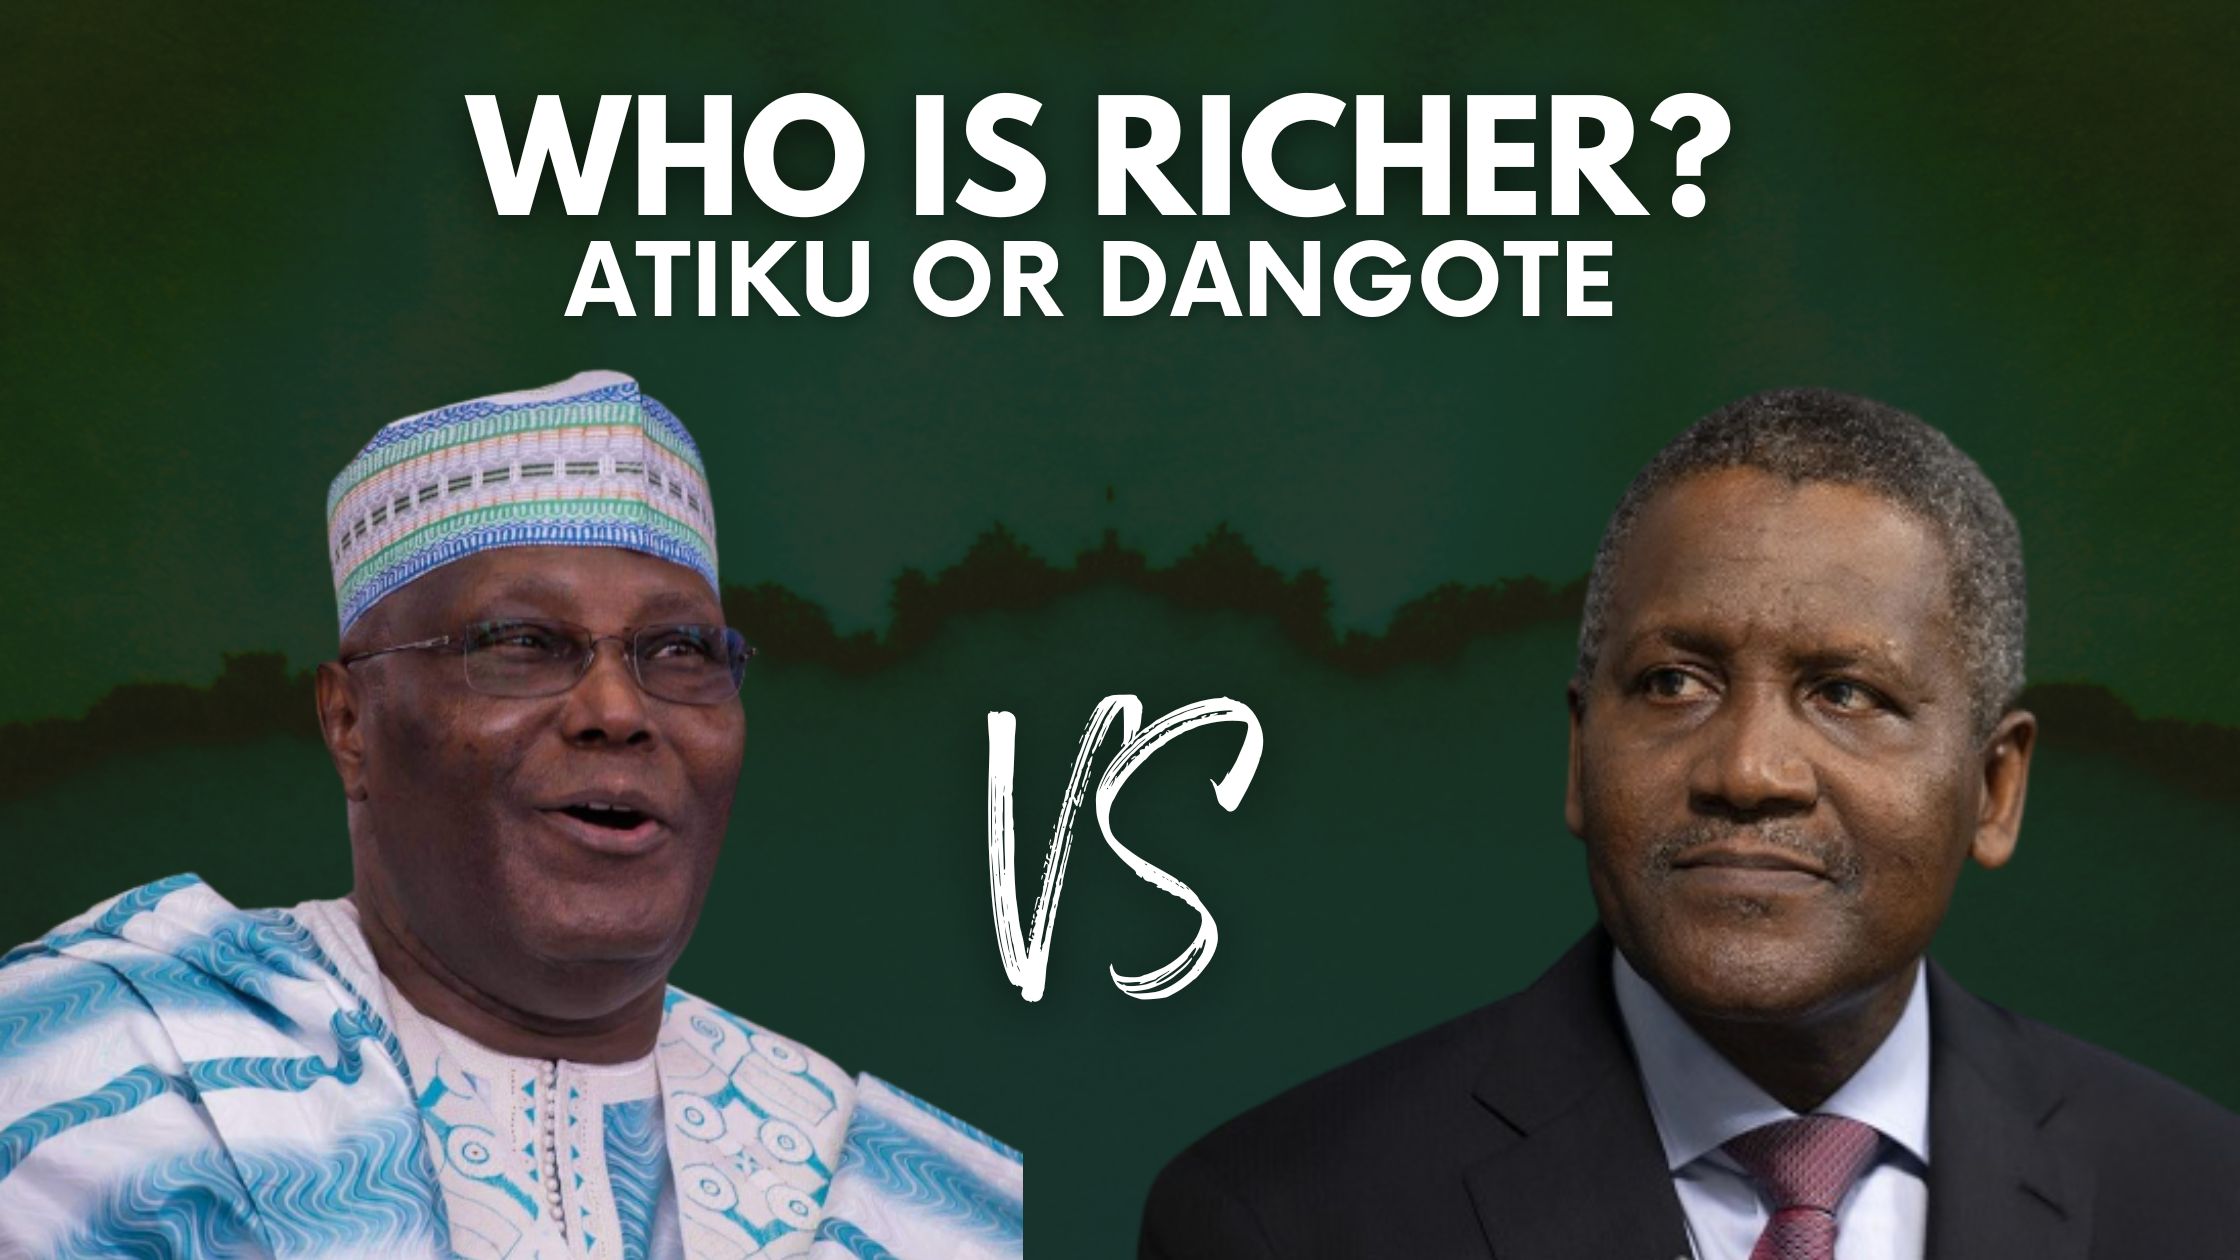 Who is Richer Between Atiku and Dangote?